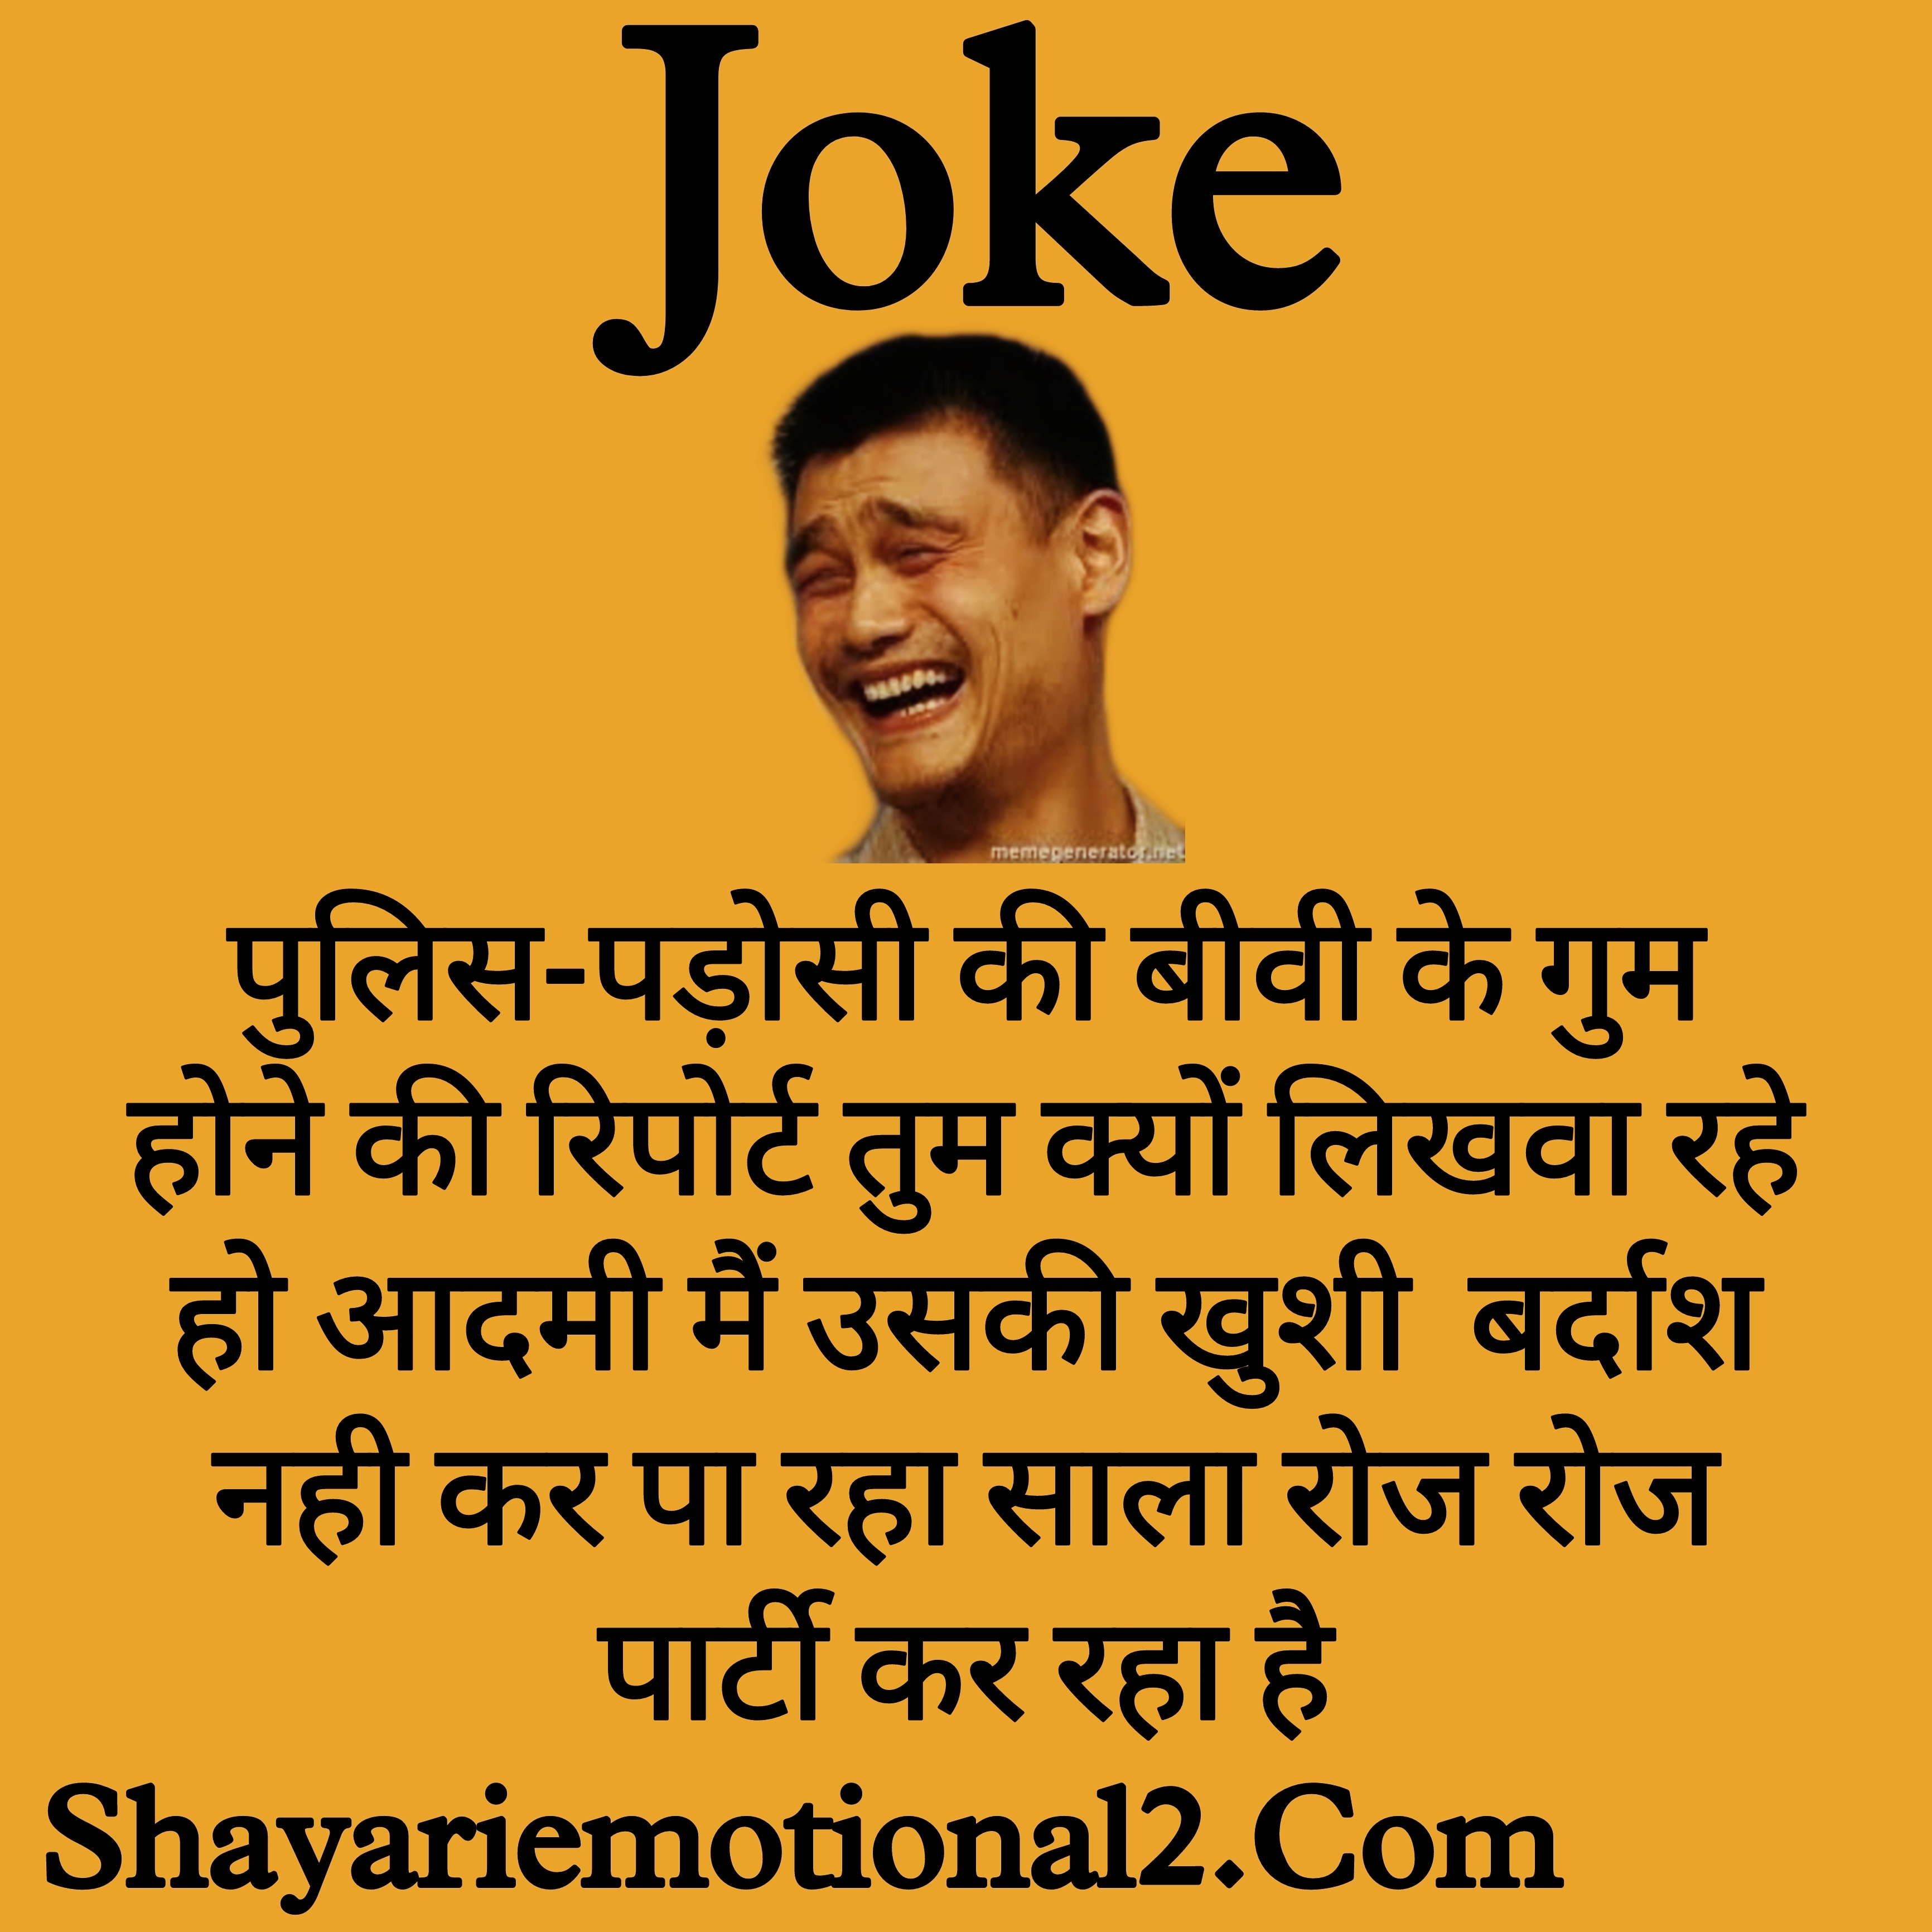 Funny comedy jokes in hindi